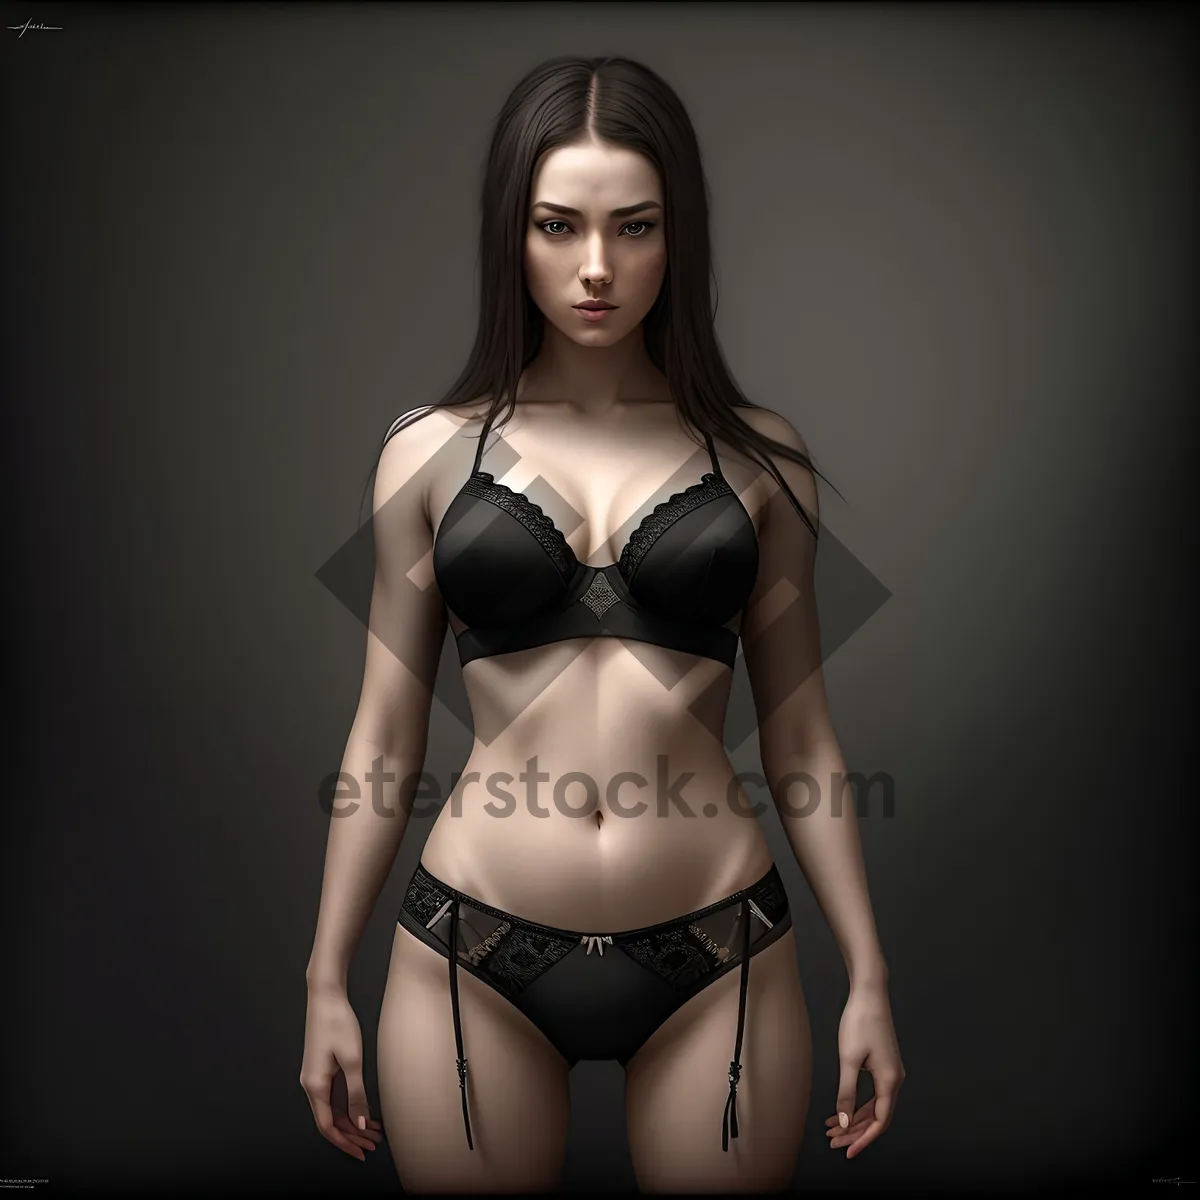 Picture of Seductive Black Lace Lingerie on Attractive Model